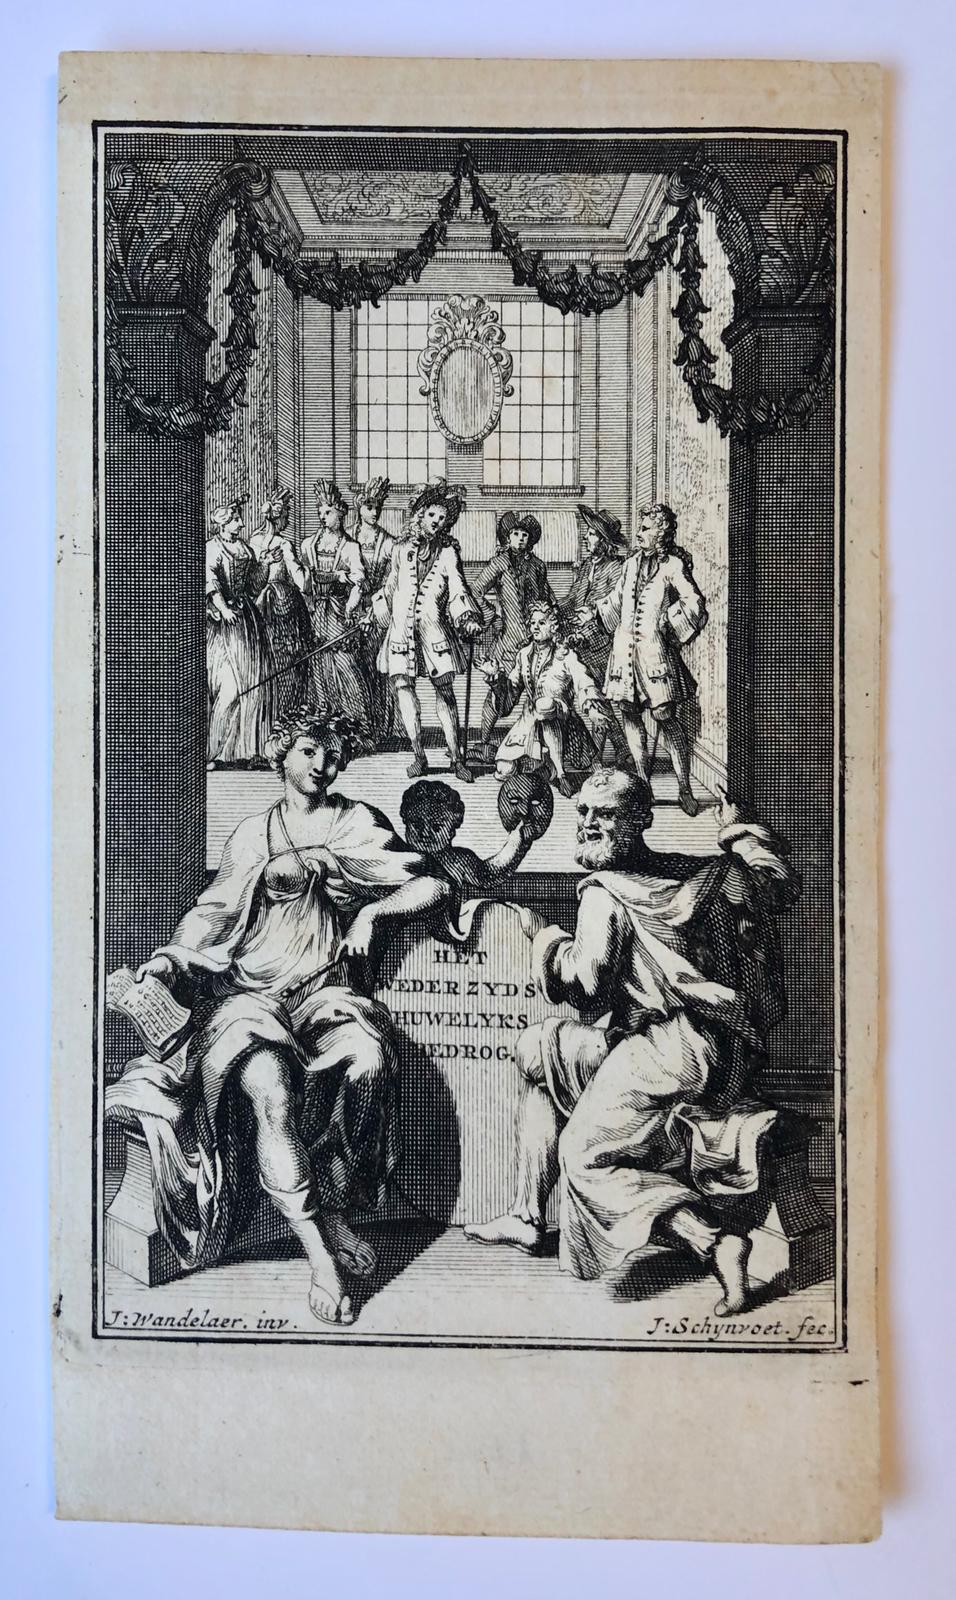 [Antique title page, ca. 1714] Het Wederzyds huwelyks bedrog, published ca. 1714, 1 p.